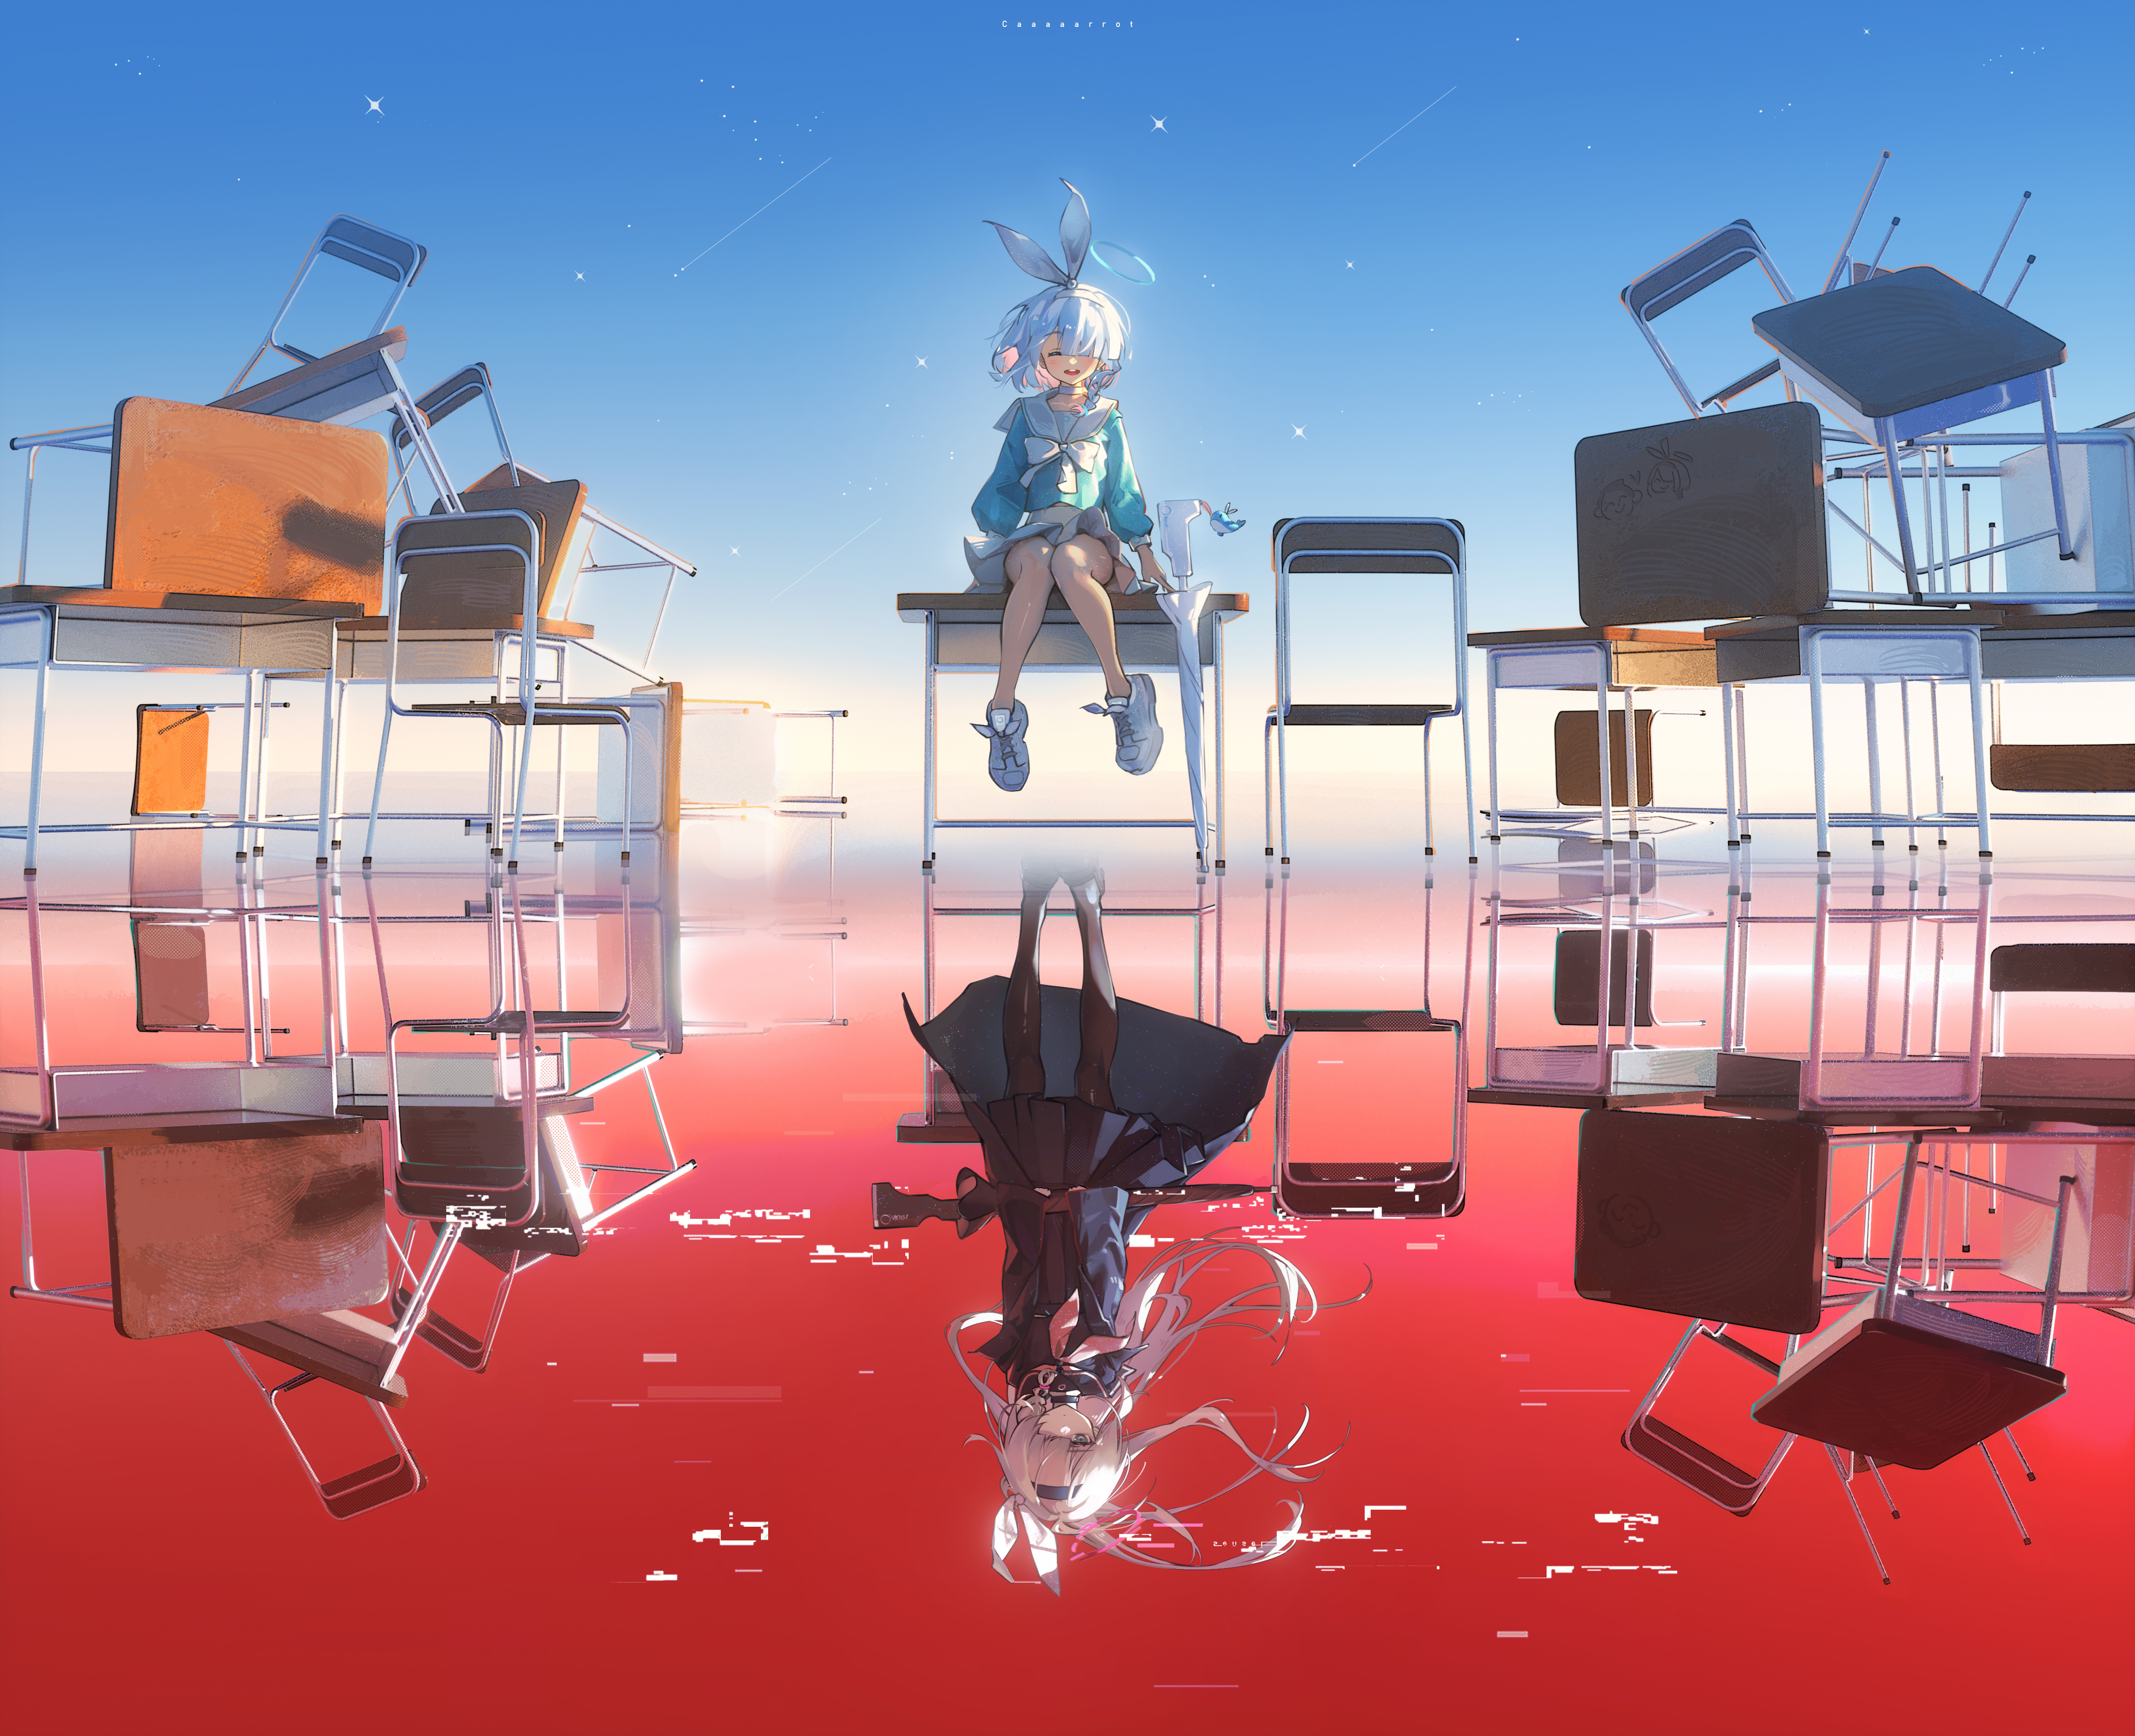 Anime Anime Girls Reflection Sitting Schoolgirl School Uniform Desk Chair Hair Over One Eye Bow Tie  5000x4065